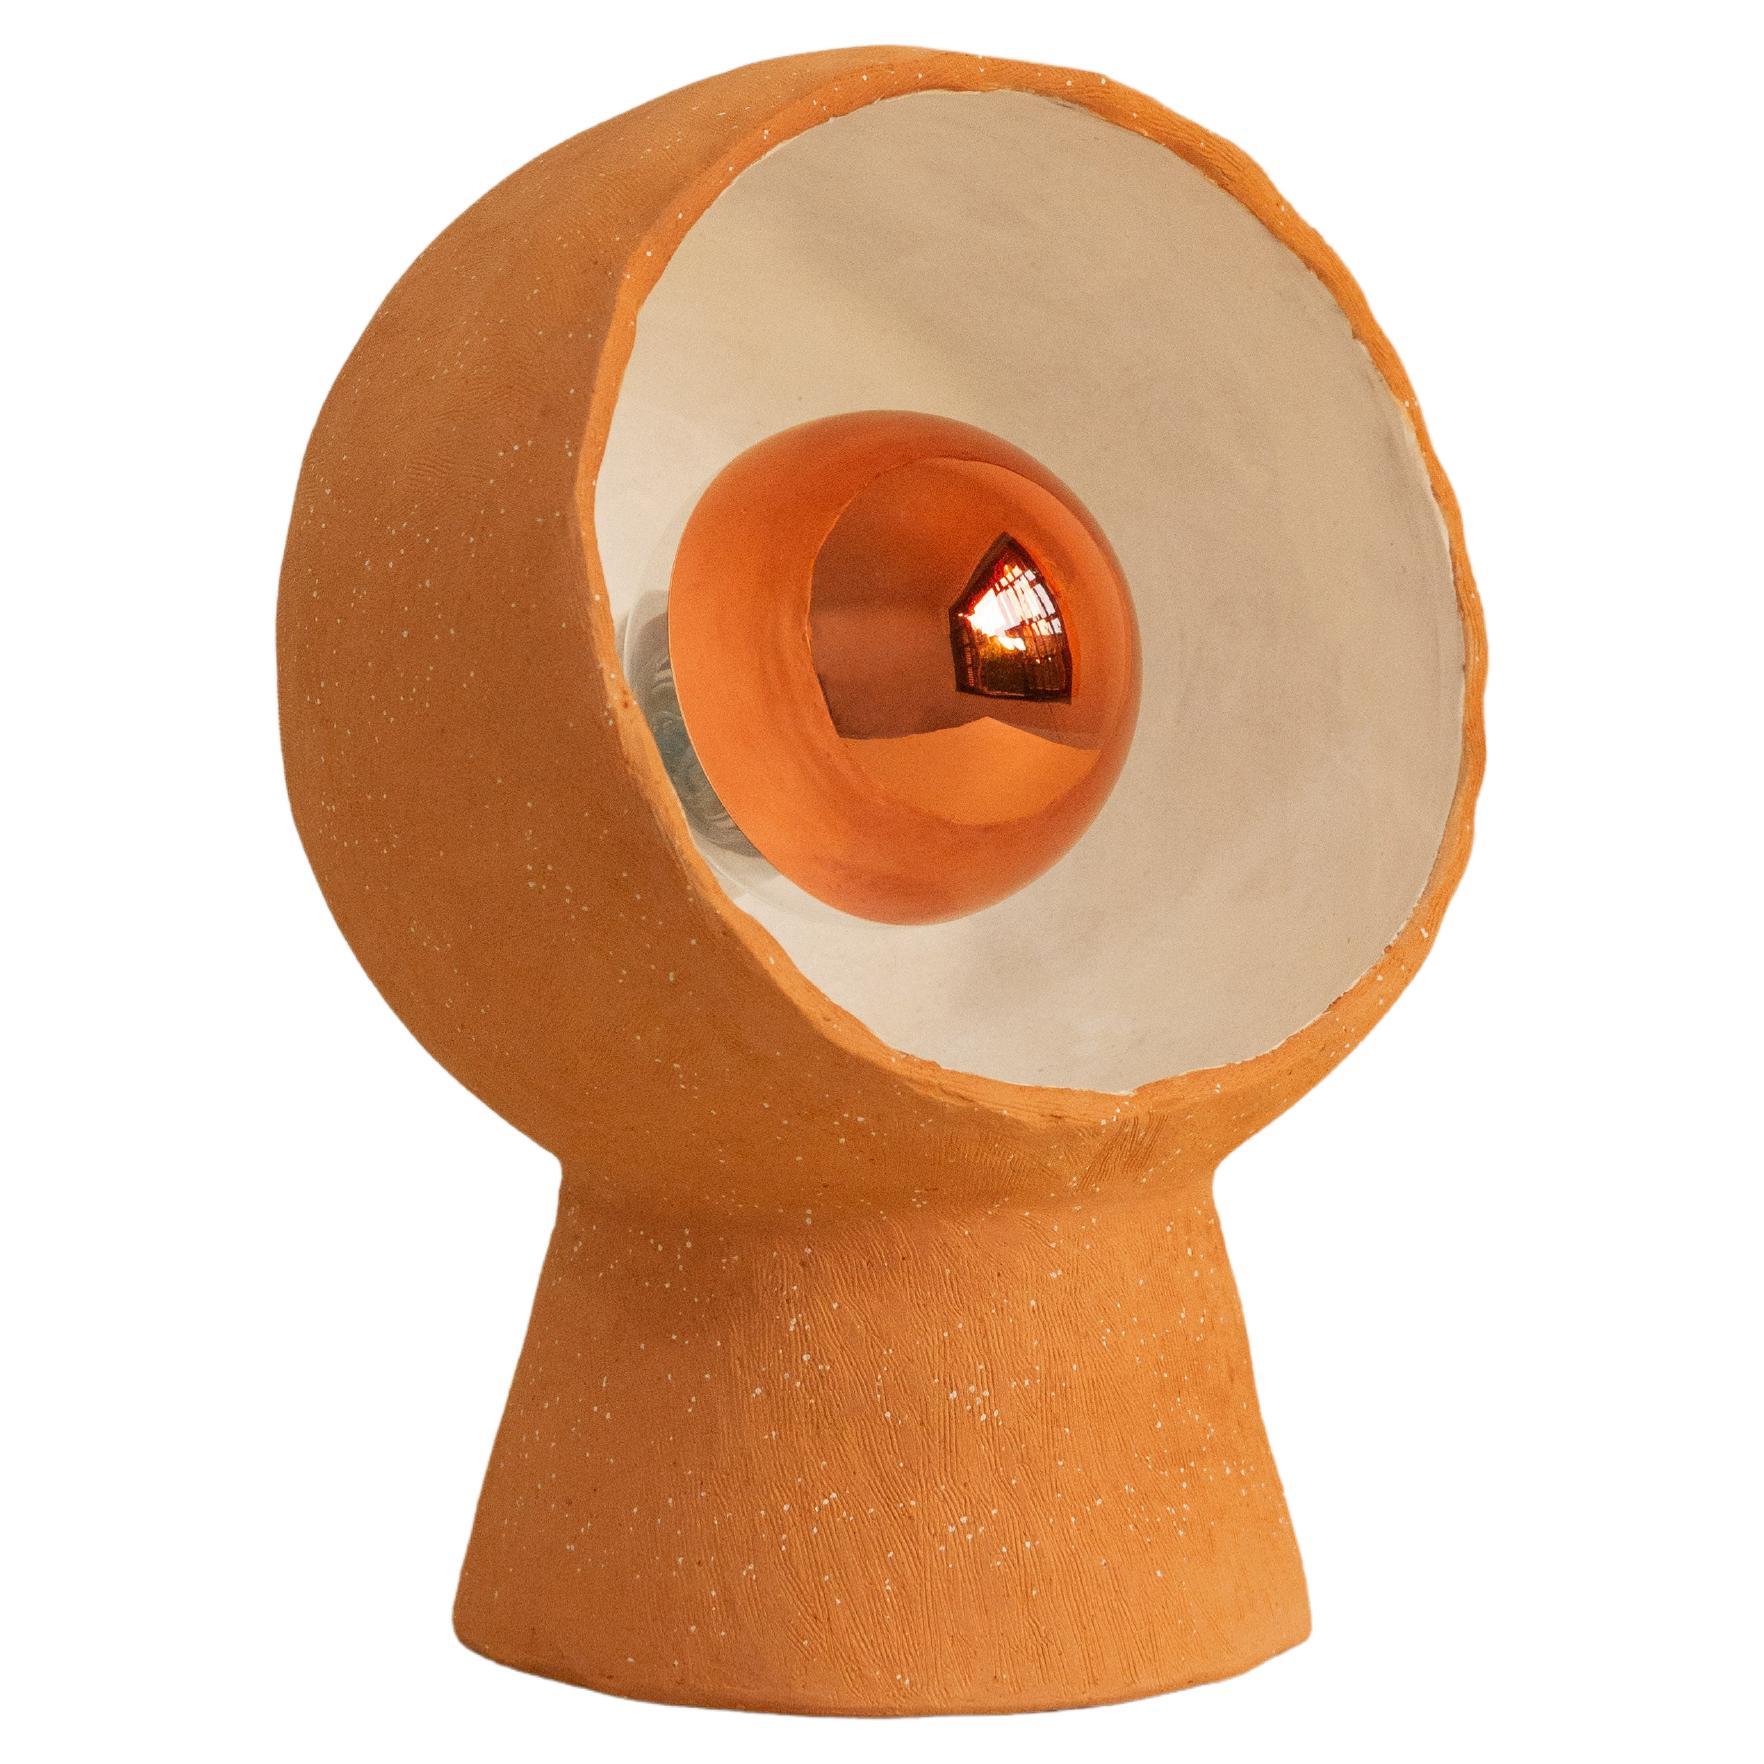 Keramik-Tischlampe mit Augenaugen-Skulptur, handgefertigt